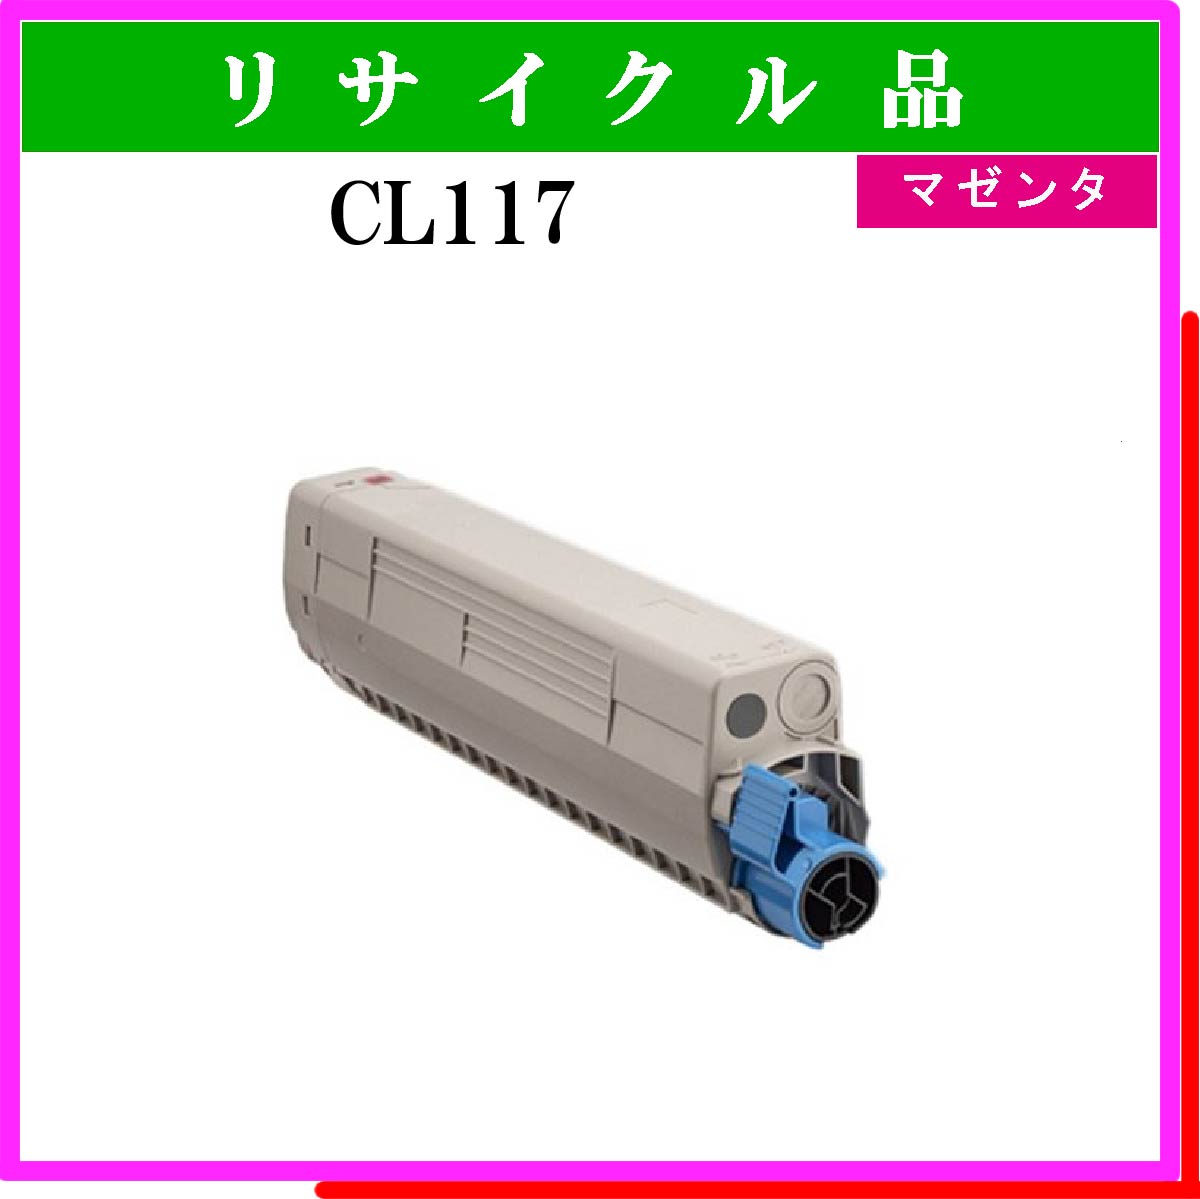 CL117 ﾏｾﾞﾝﾀ - ウインドウを閉じる